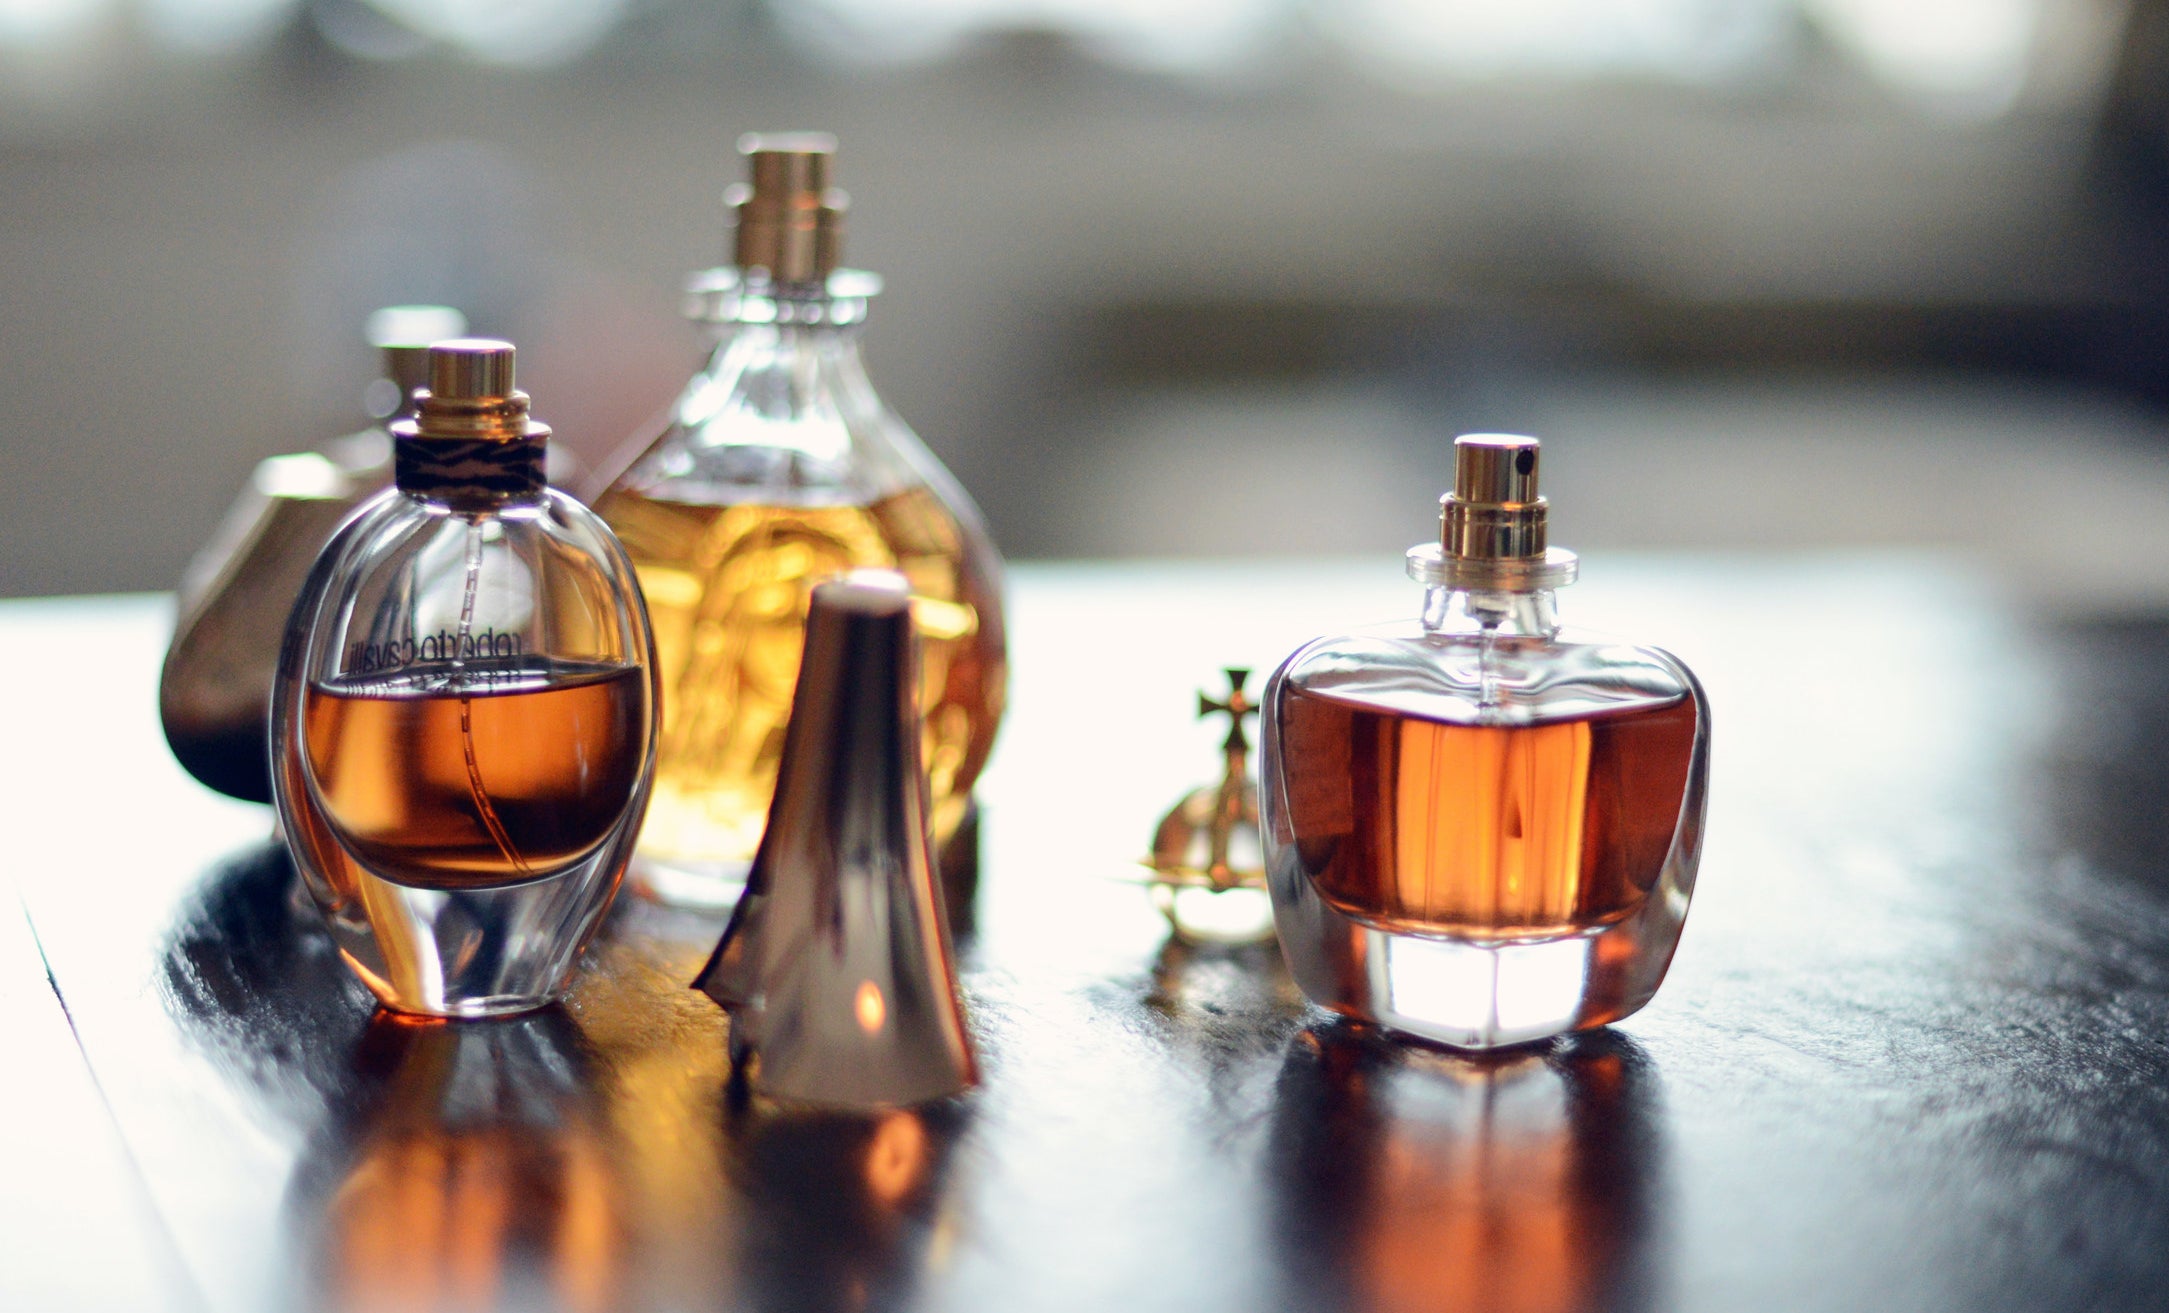 perfume bottles on a shelf